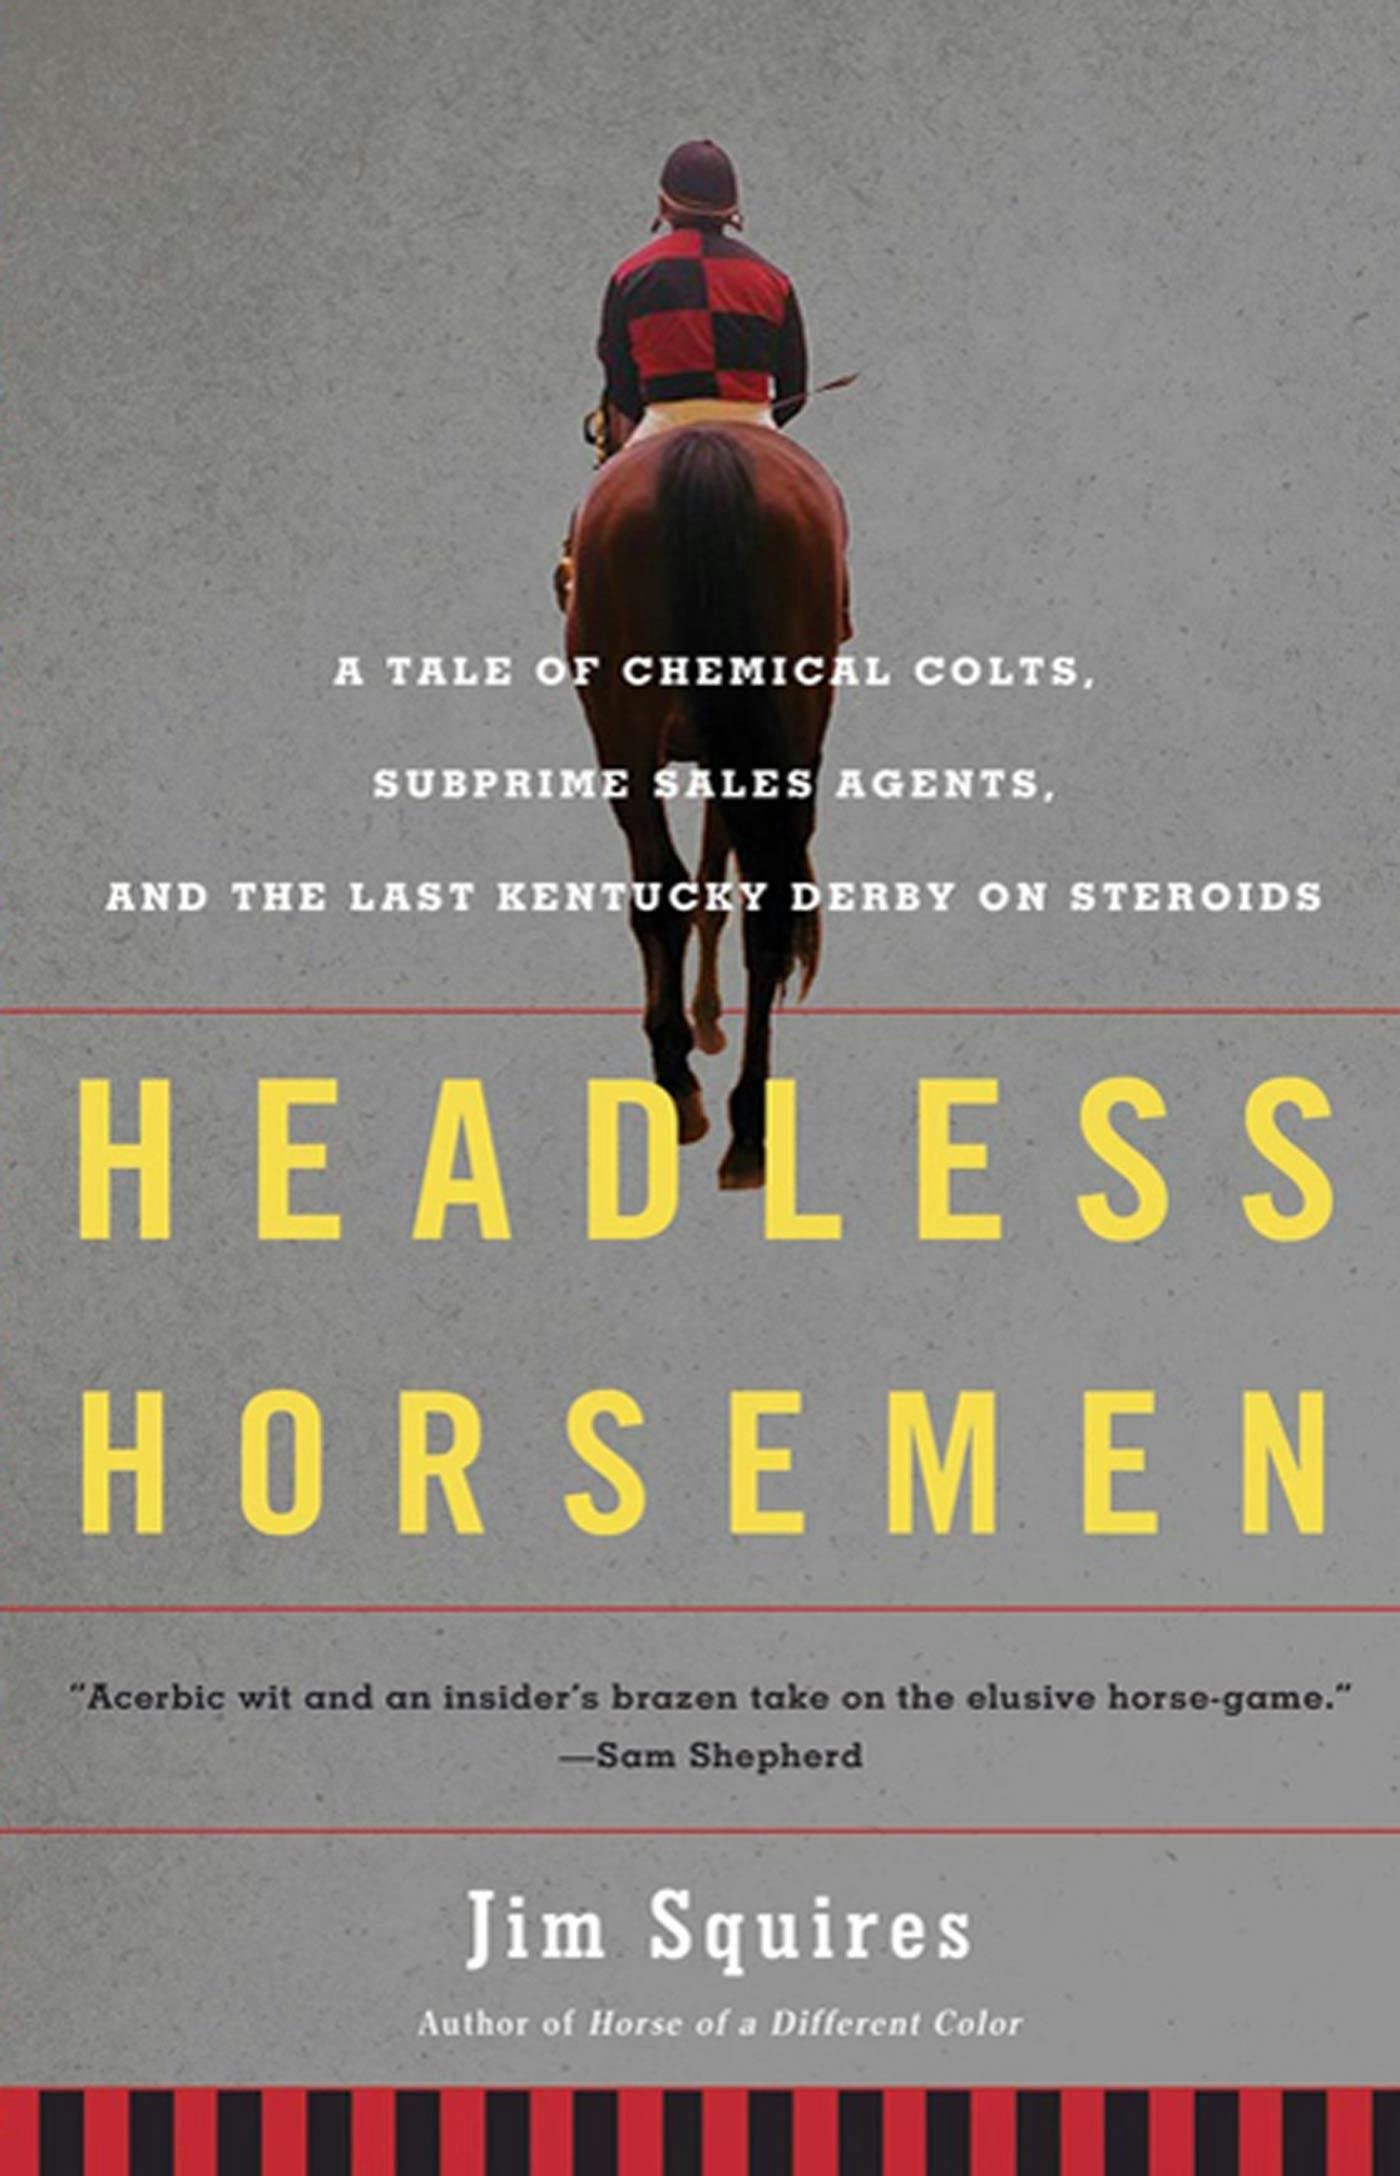 Petition · Making the headless horseman cheaper ·